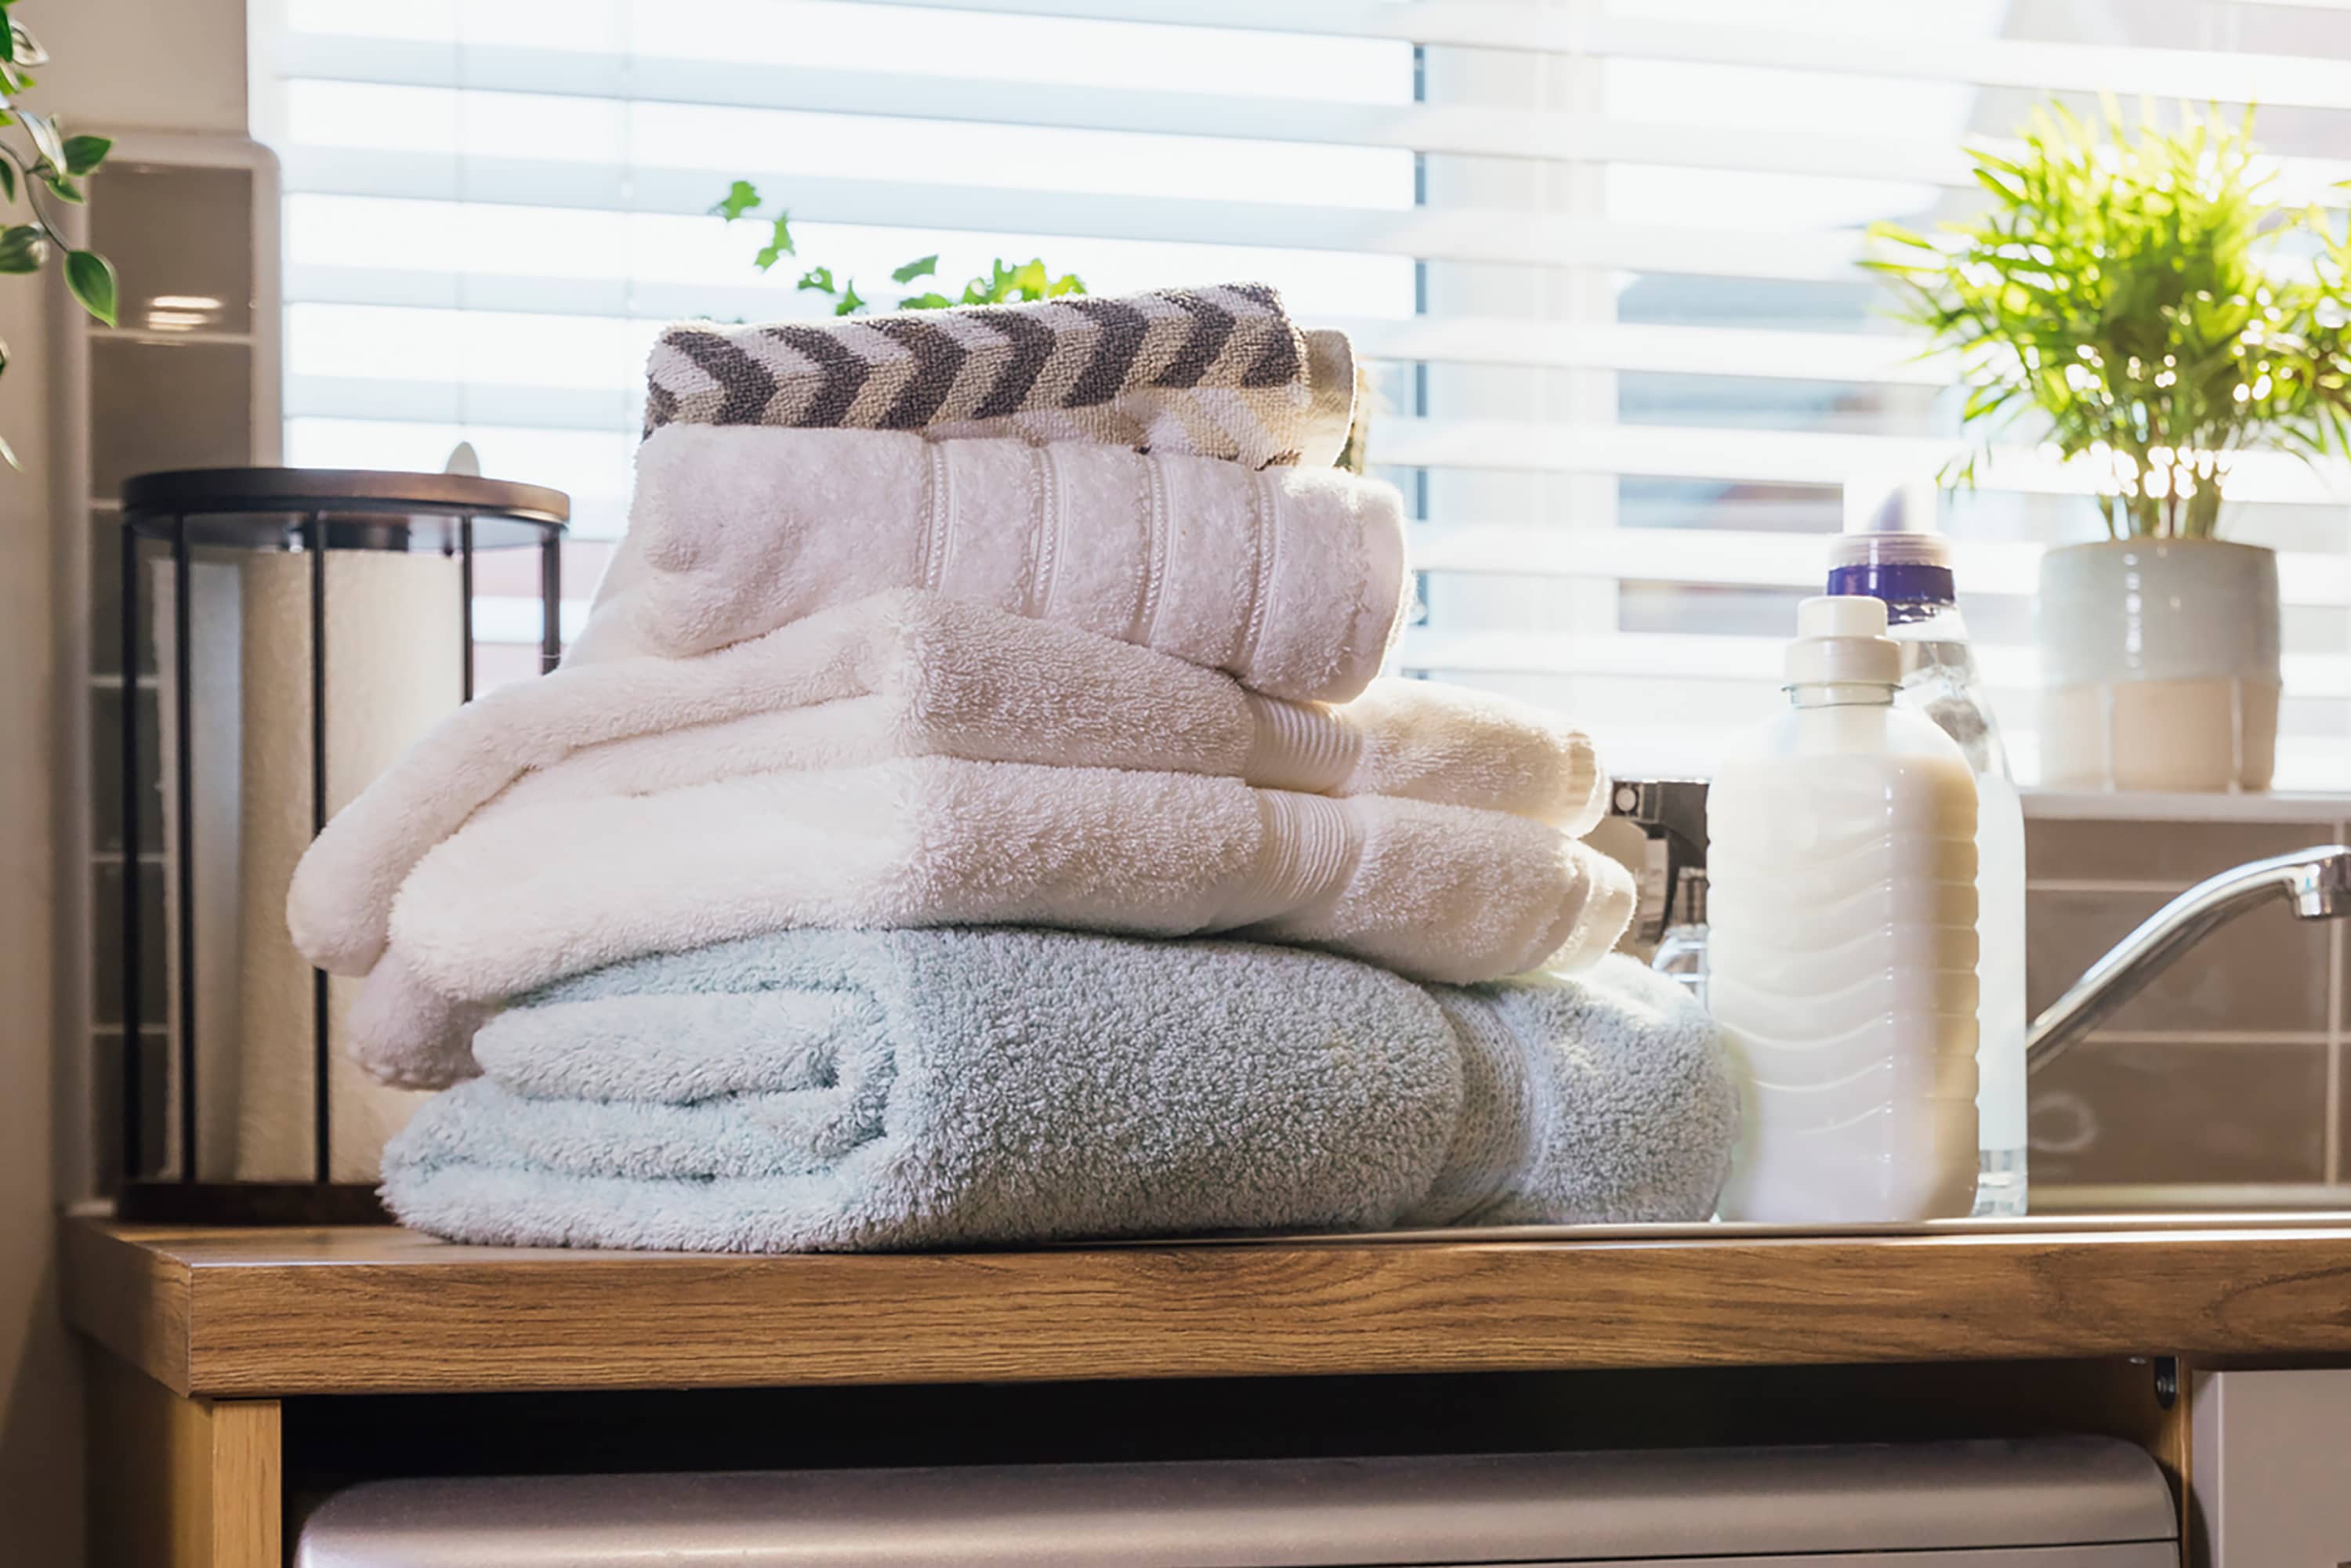 The $2 DIY Towel Organizer Your Bathroom Needs